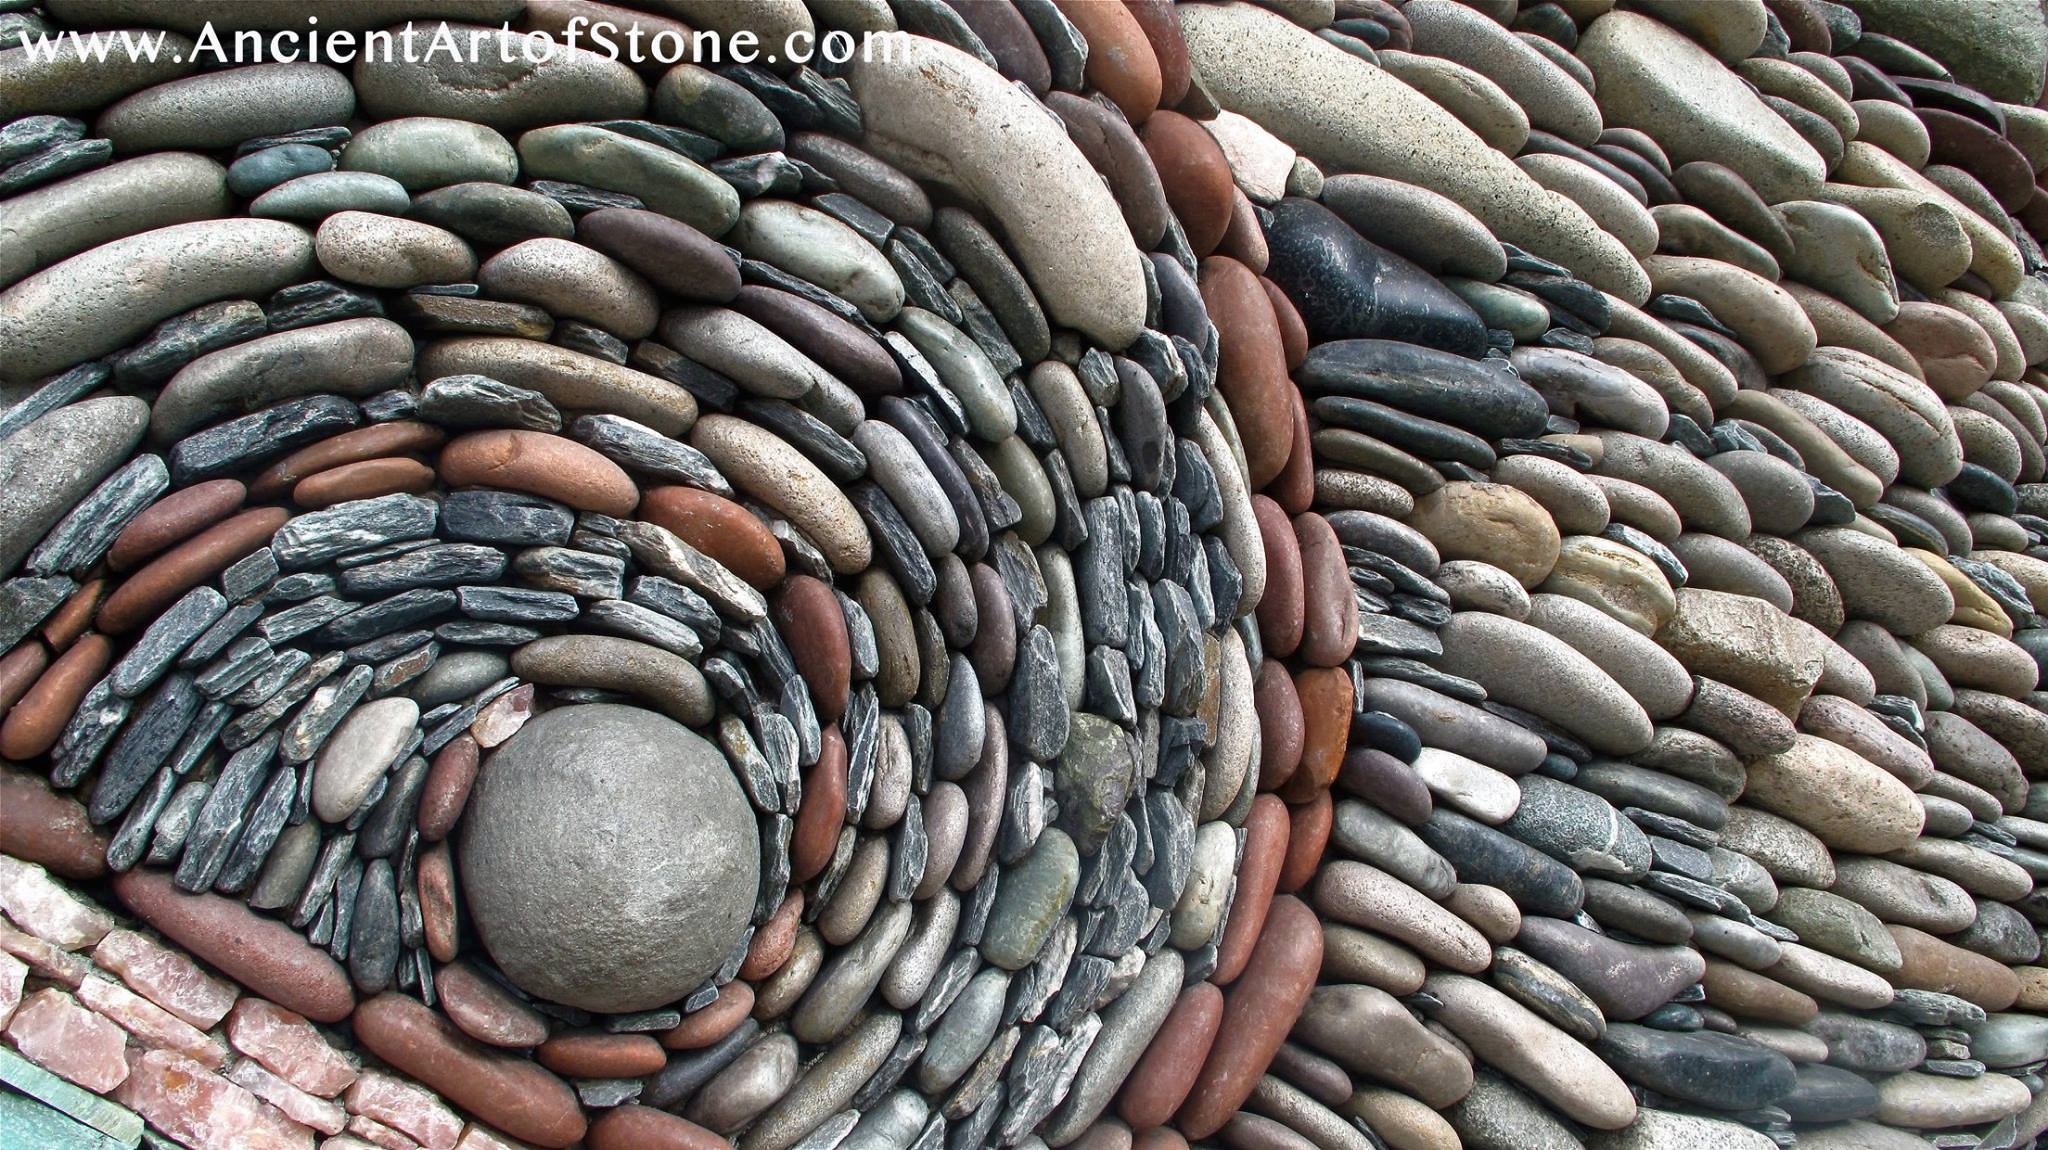 Breathtaking Stone Mosaics Turn Nature Into Art